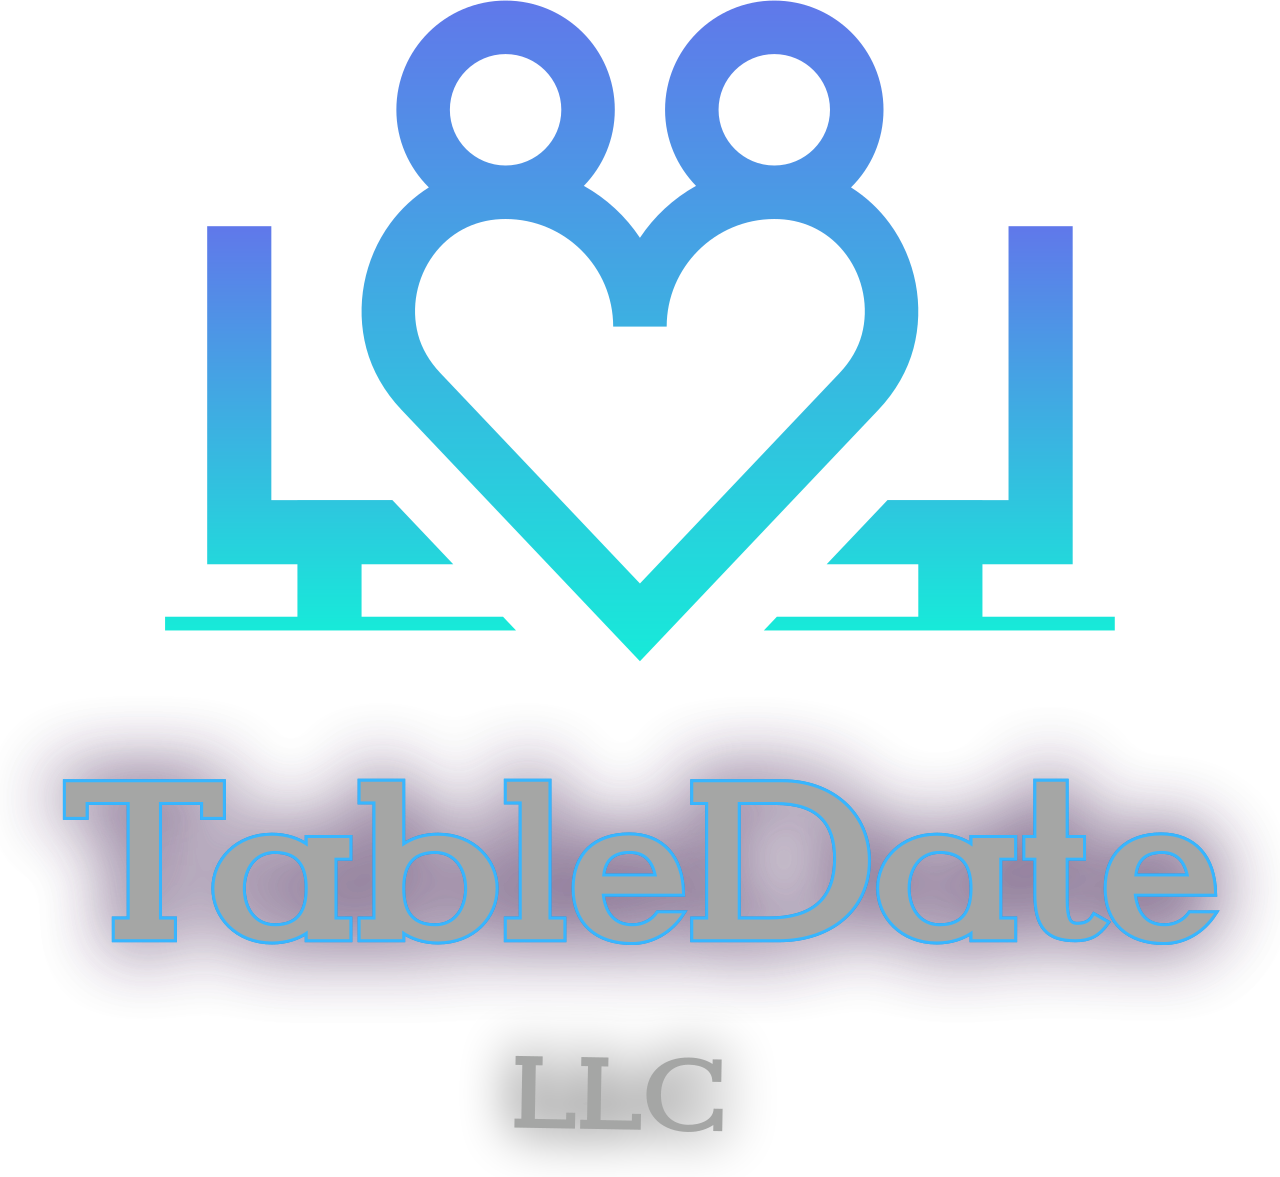 TableDate's logo